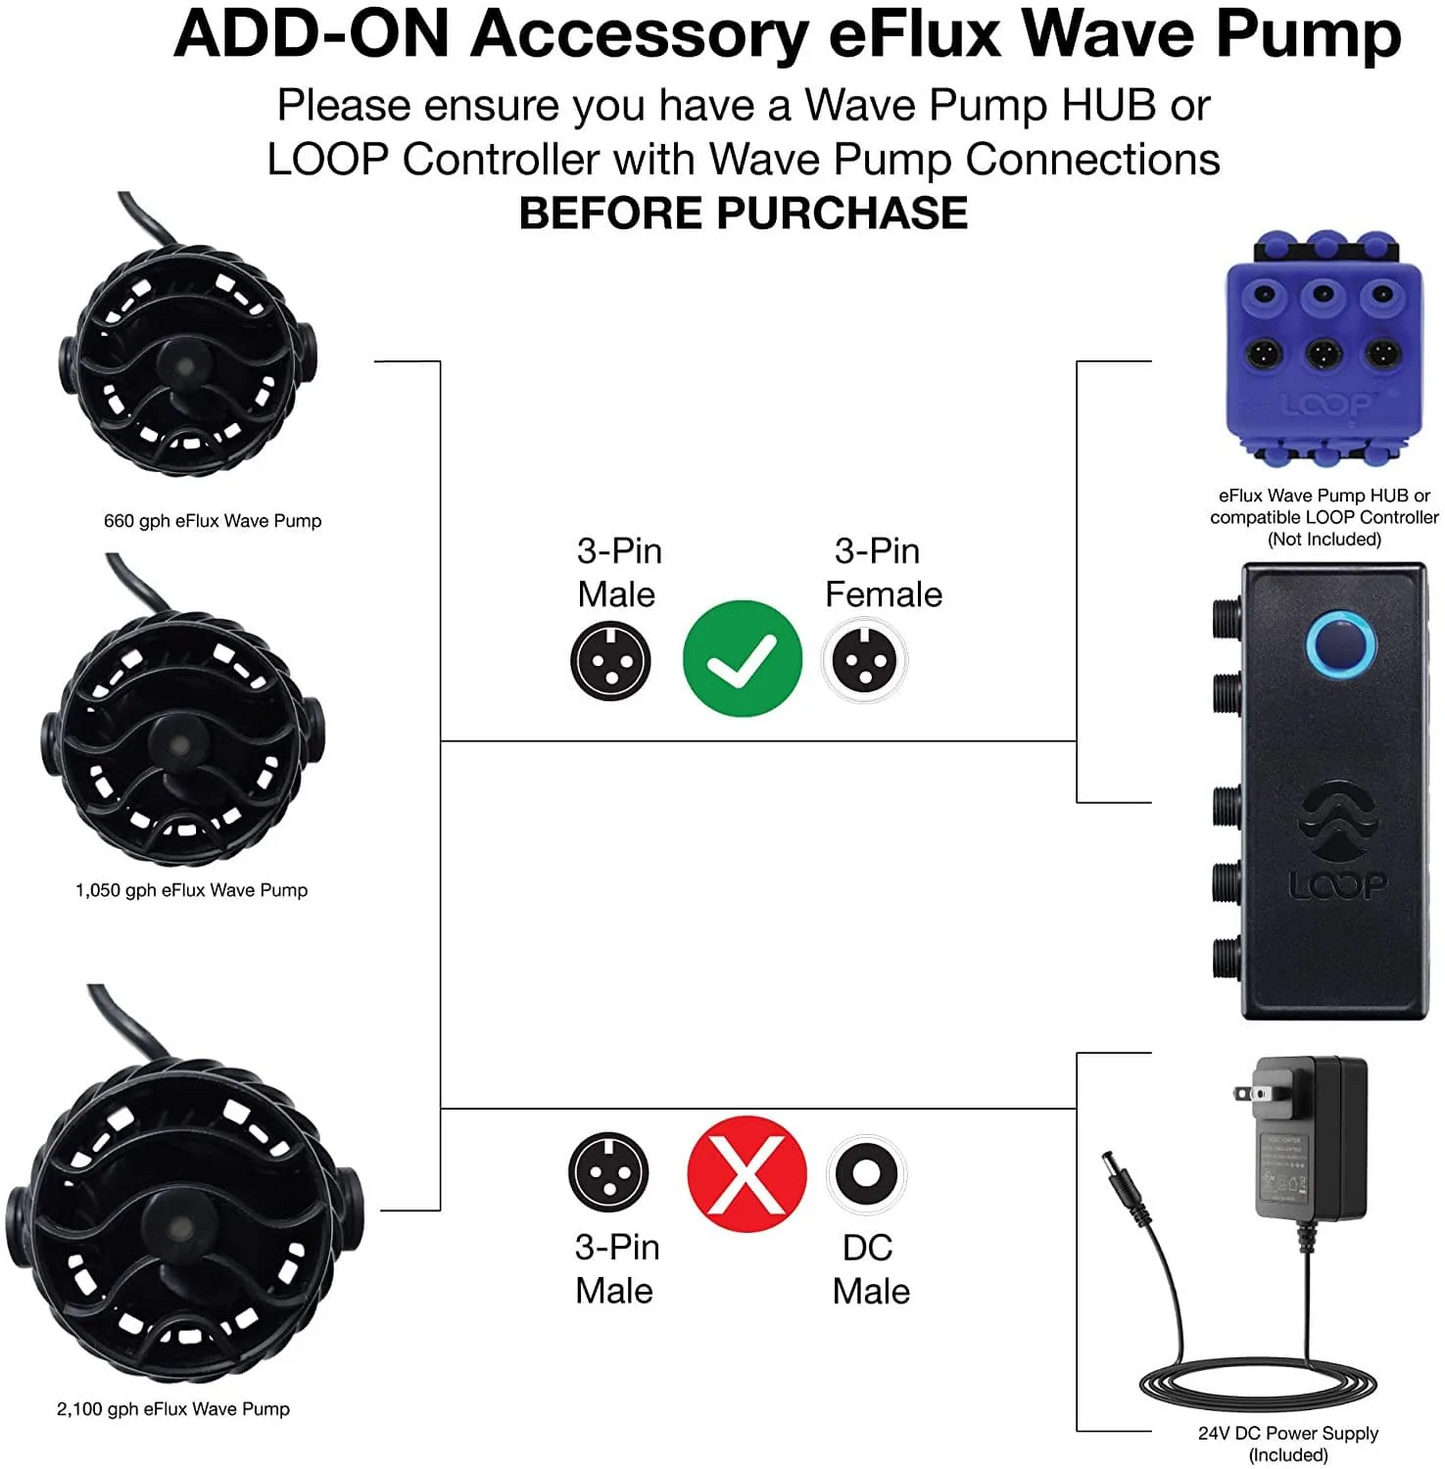 Current eFlux Wave Pump 660 Accessory Wave Pump Part#6004